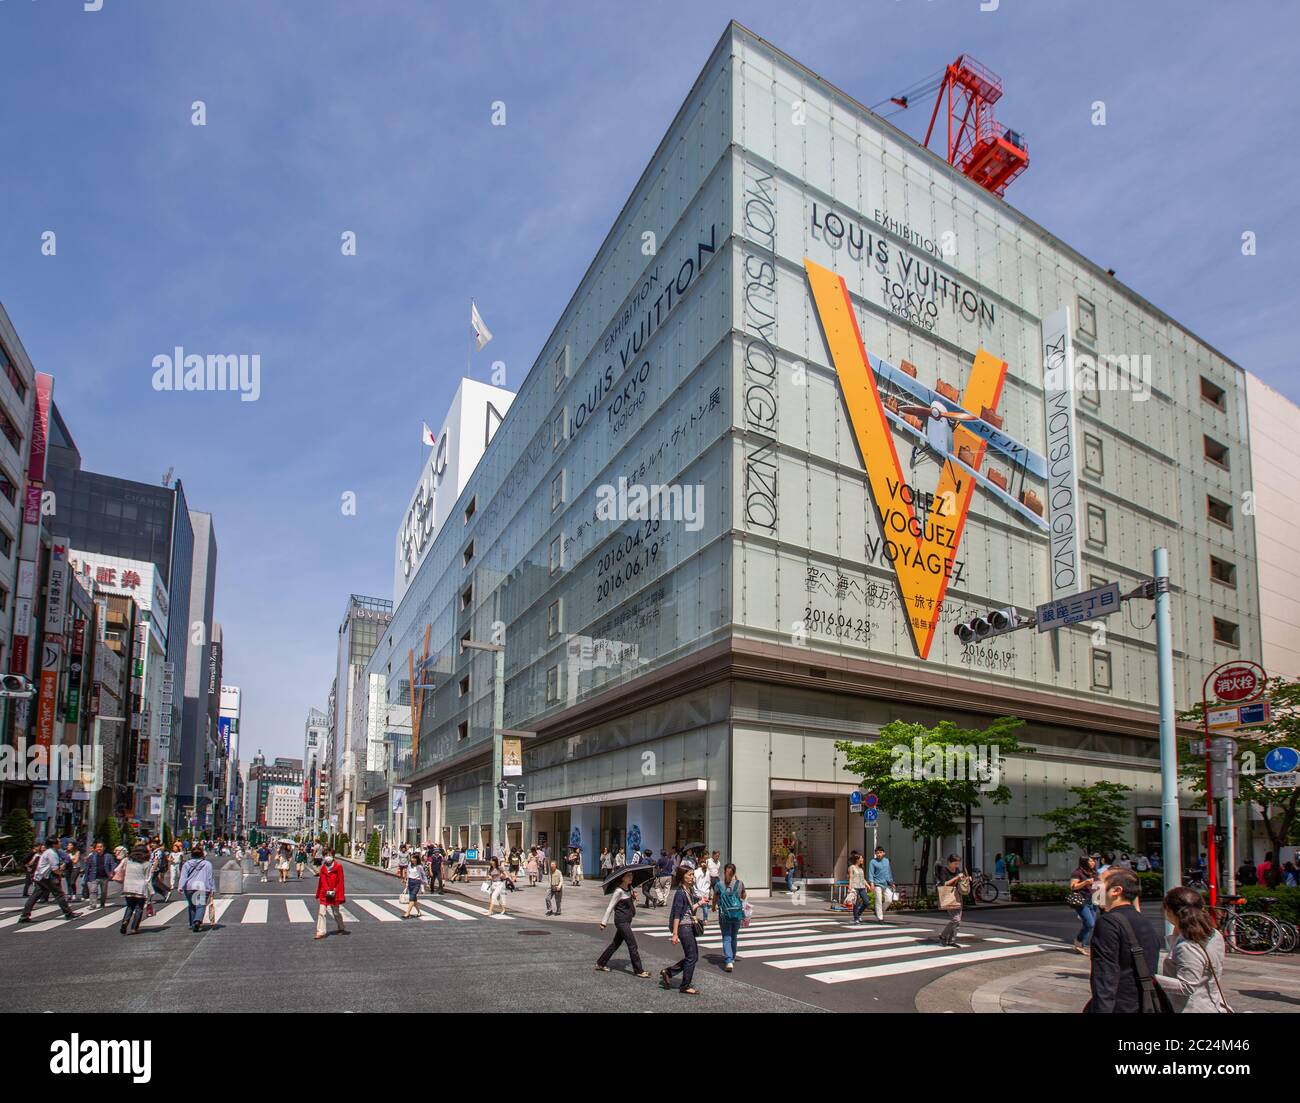 Louis Vuitton logo, Tokyo, Japan Stock Photo - Alamy